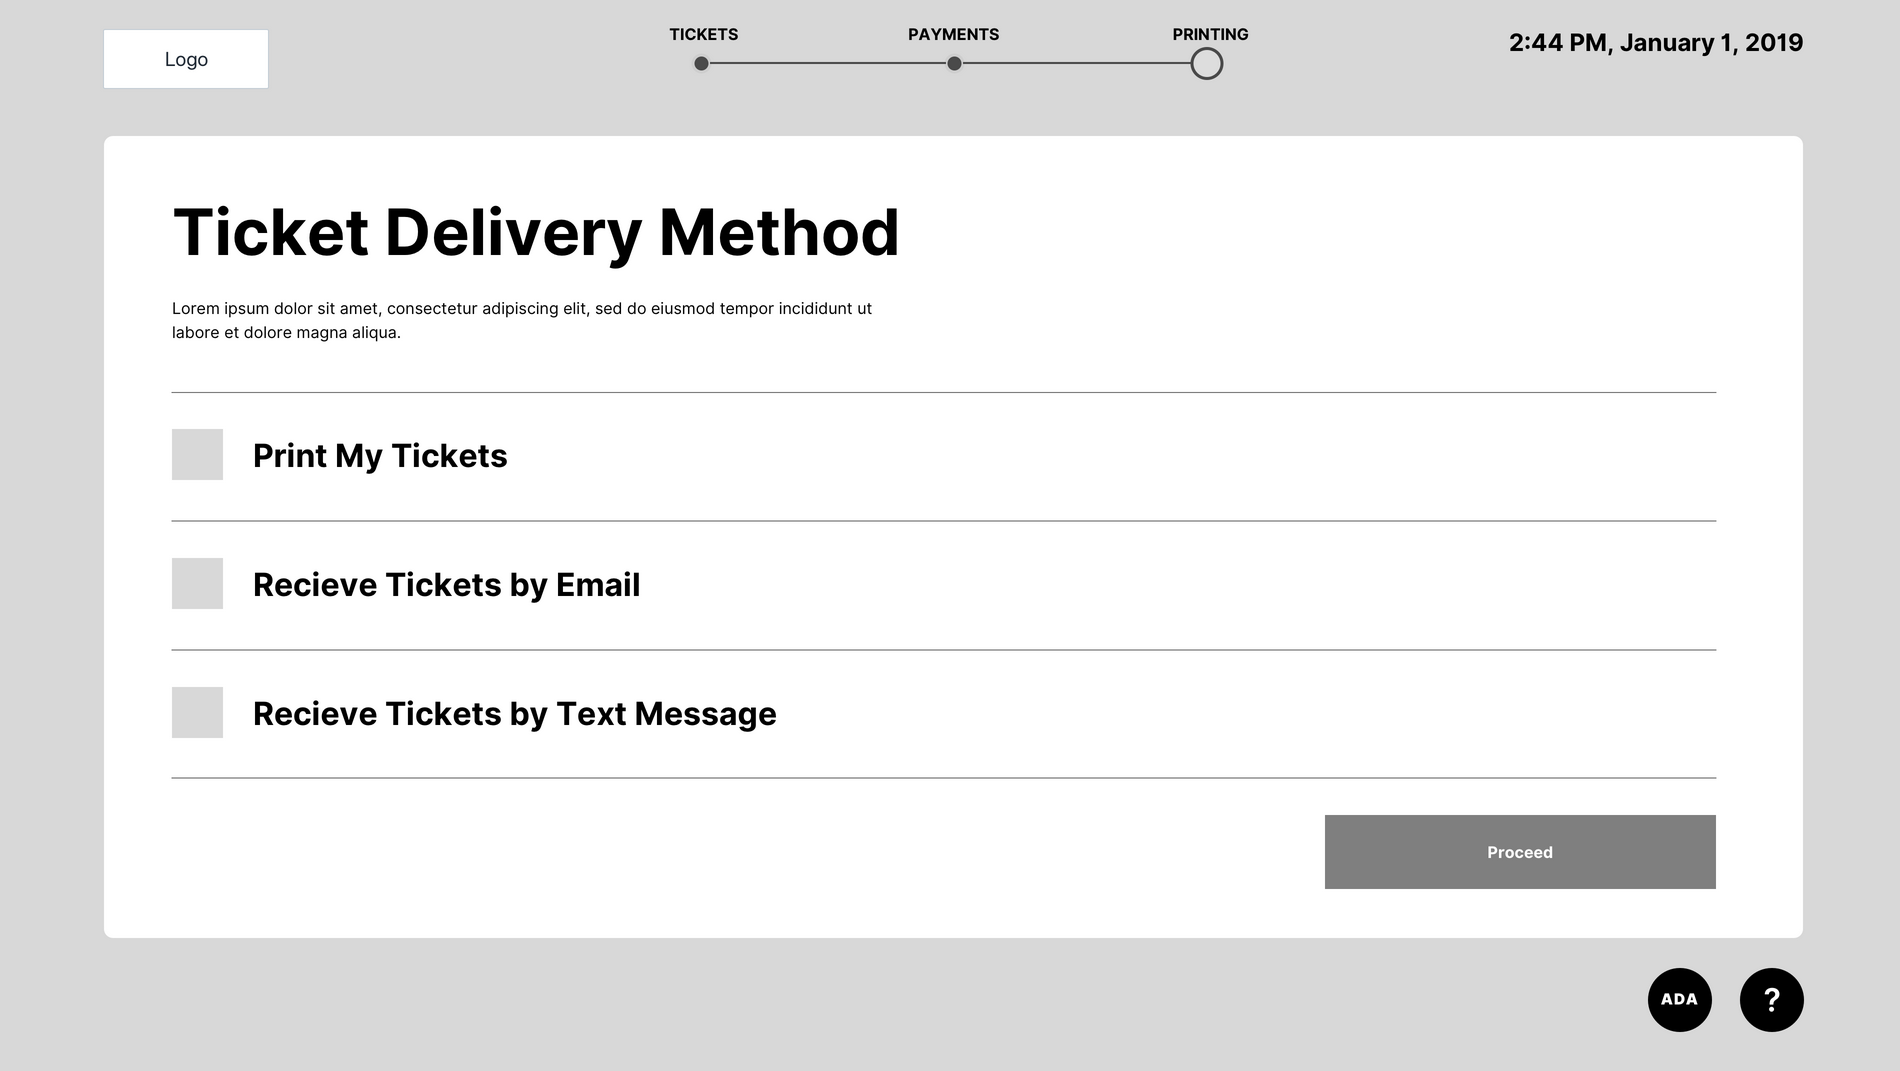 Ticket delivery methods